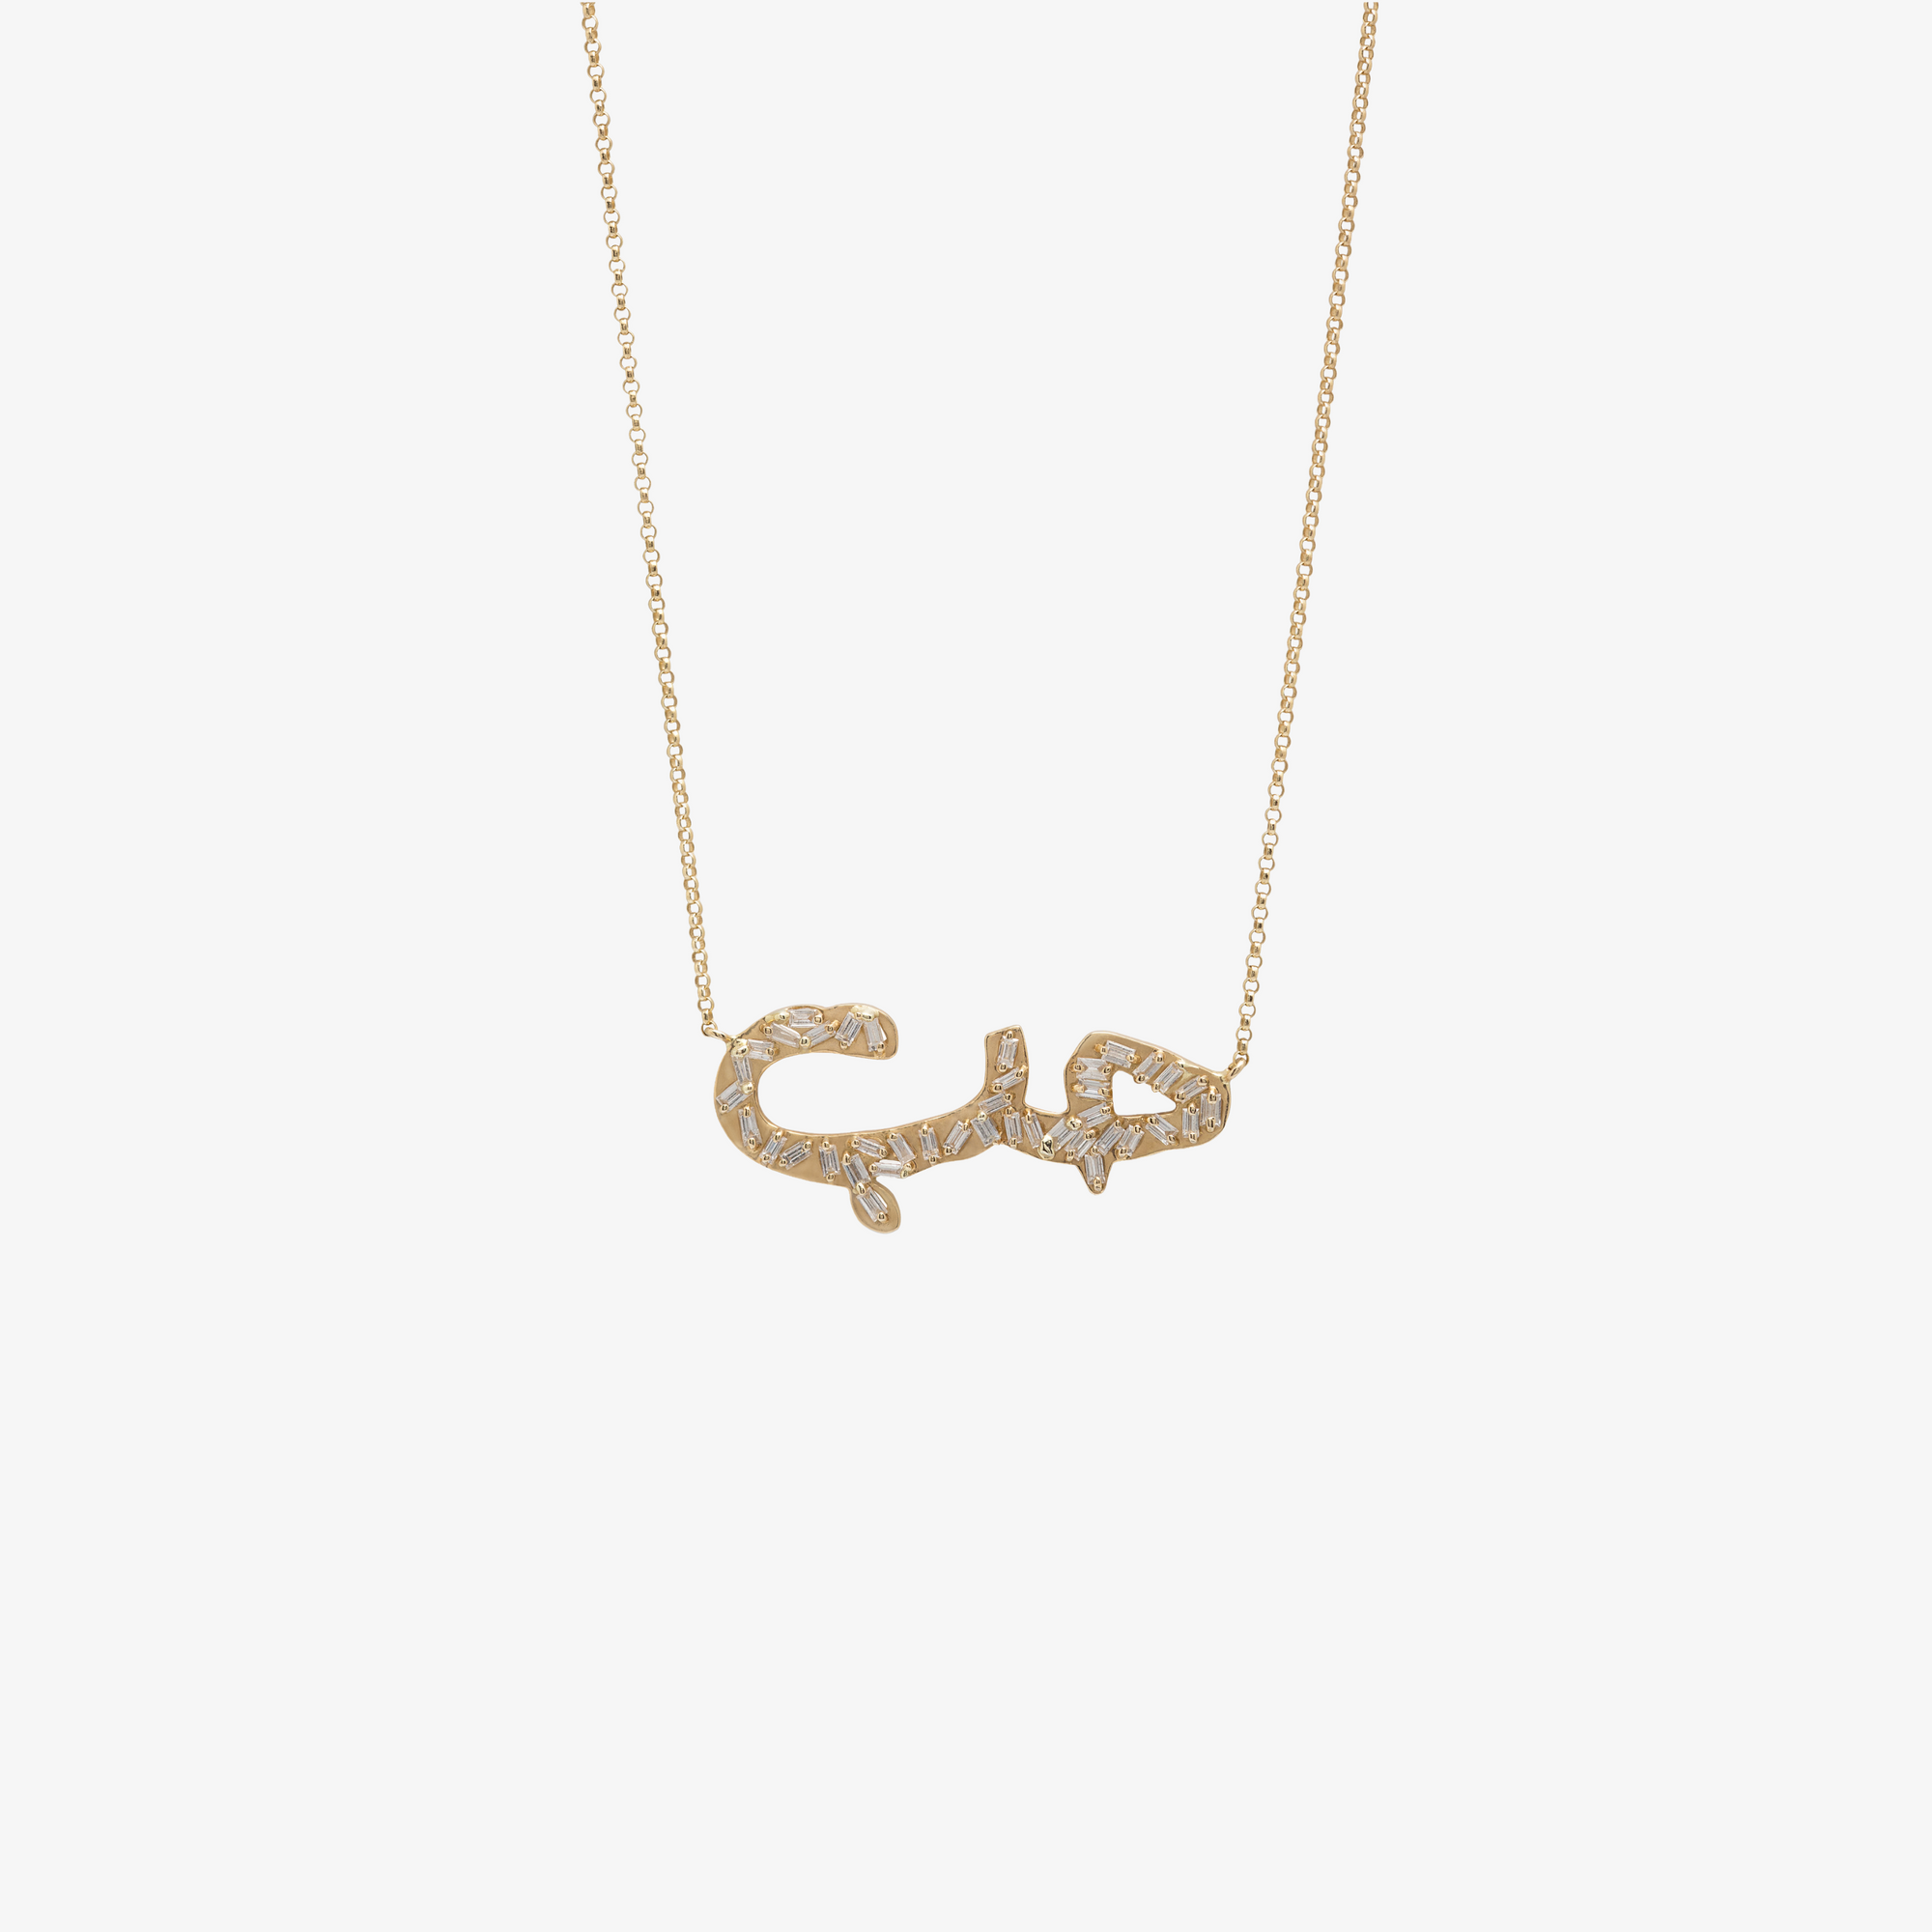 HOBB — 18K Gold & Baguette Diamond “Love” Necklace